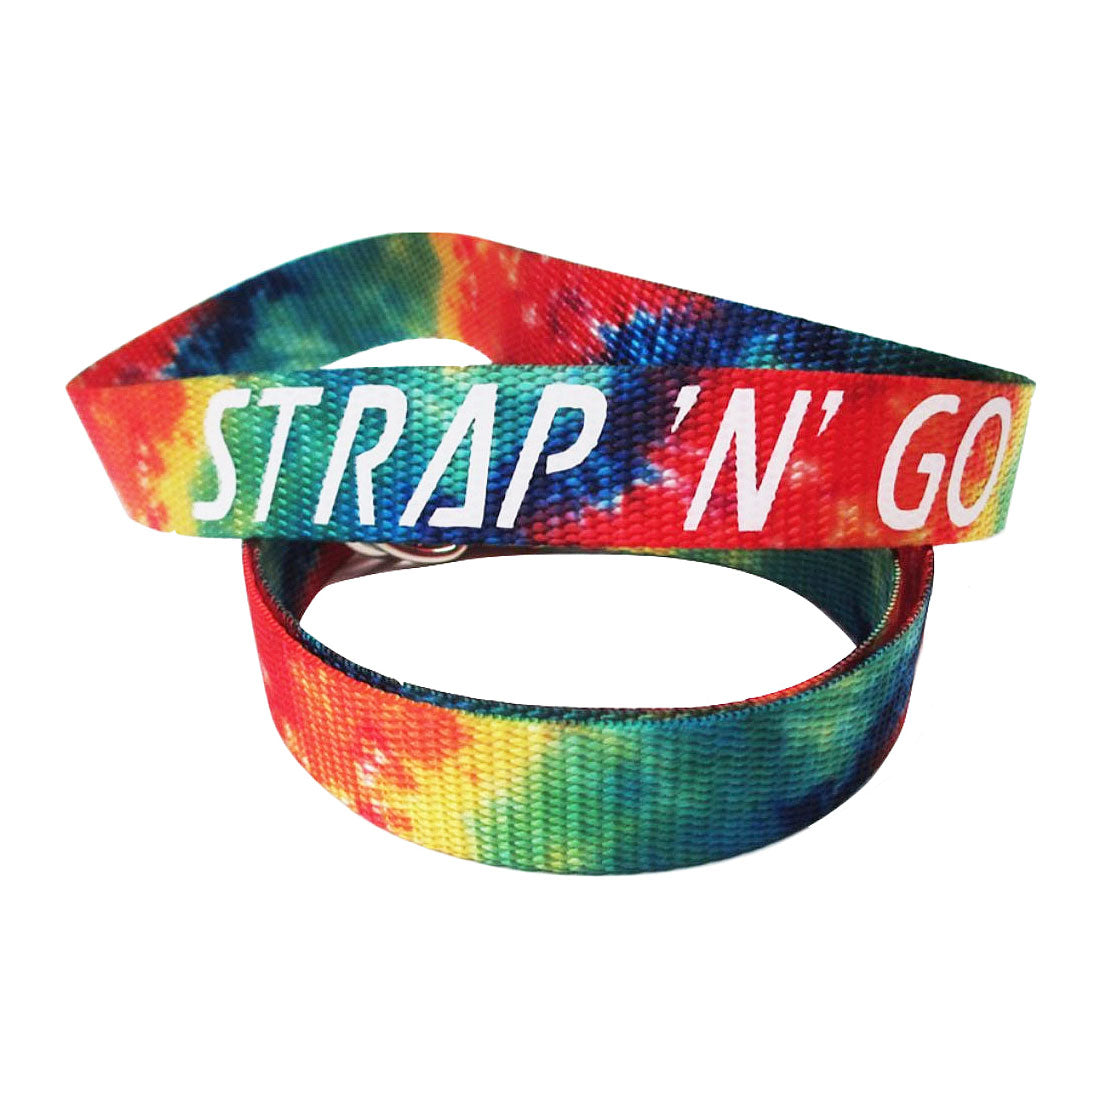 Strap N Go Skate Noose/Leash - Patterns Tie Dye Roller Skate Accessories